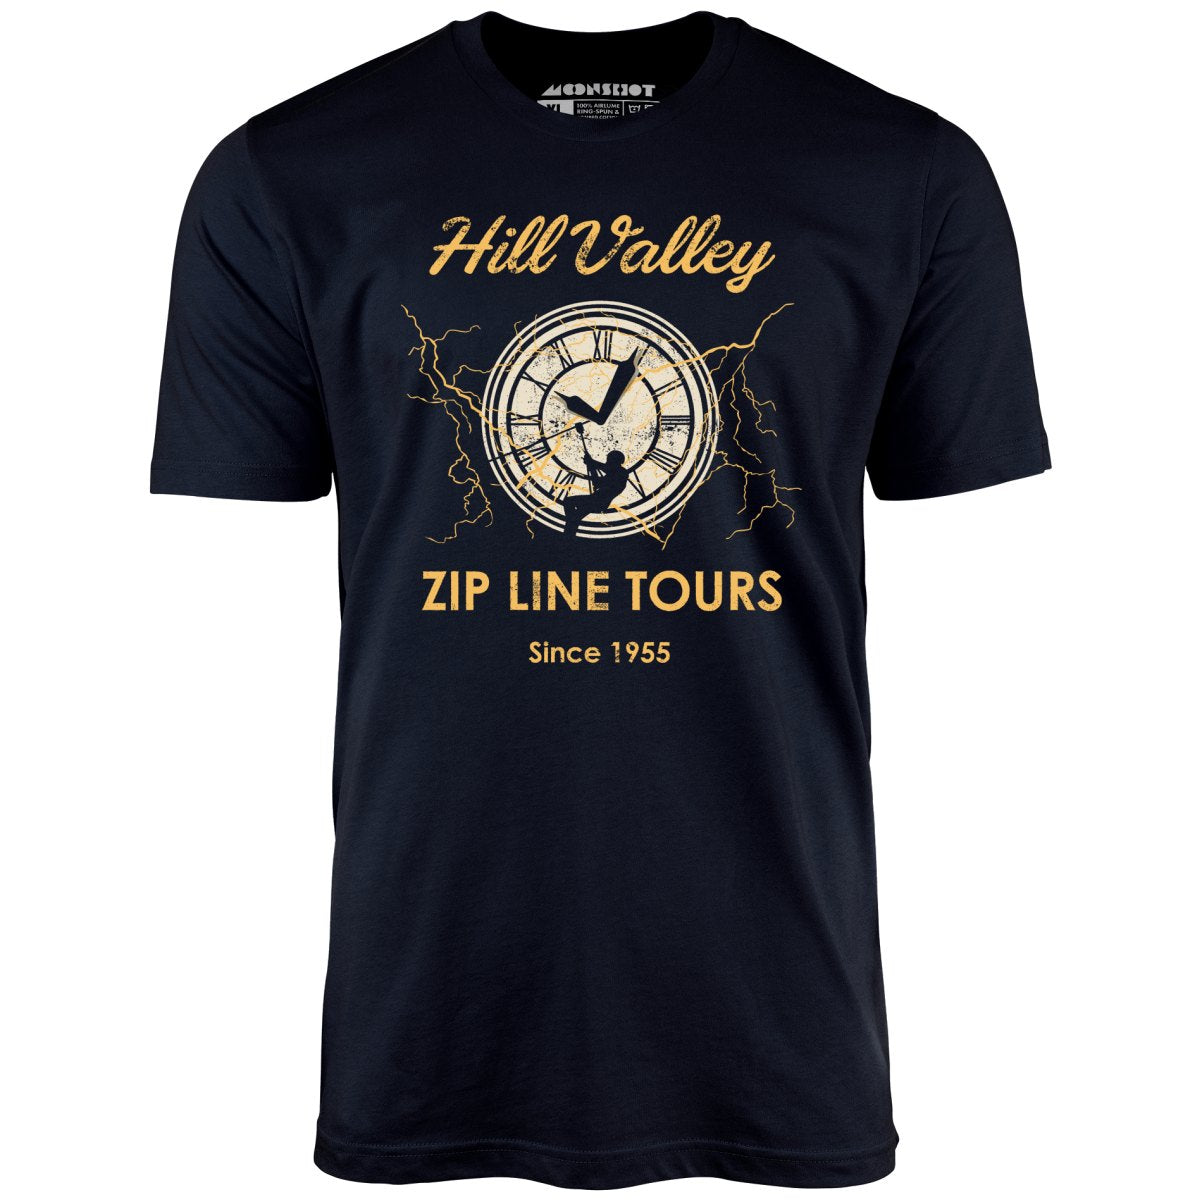 Hill Valley Zip Line Tours - Unisex T-Shirt